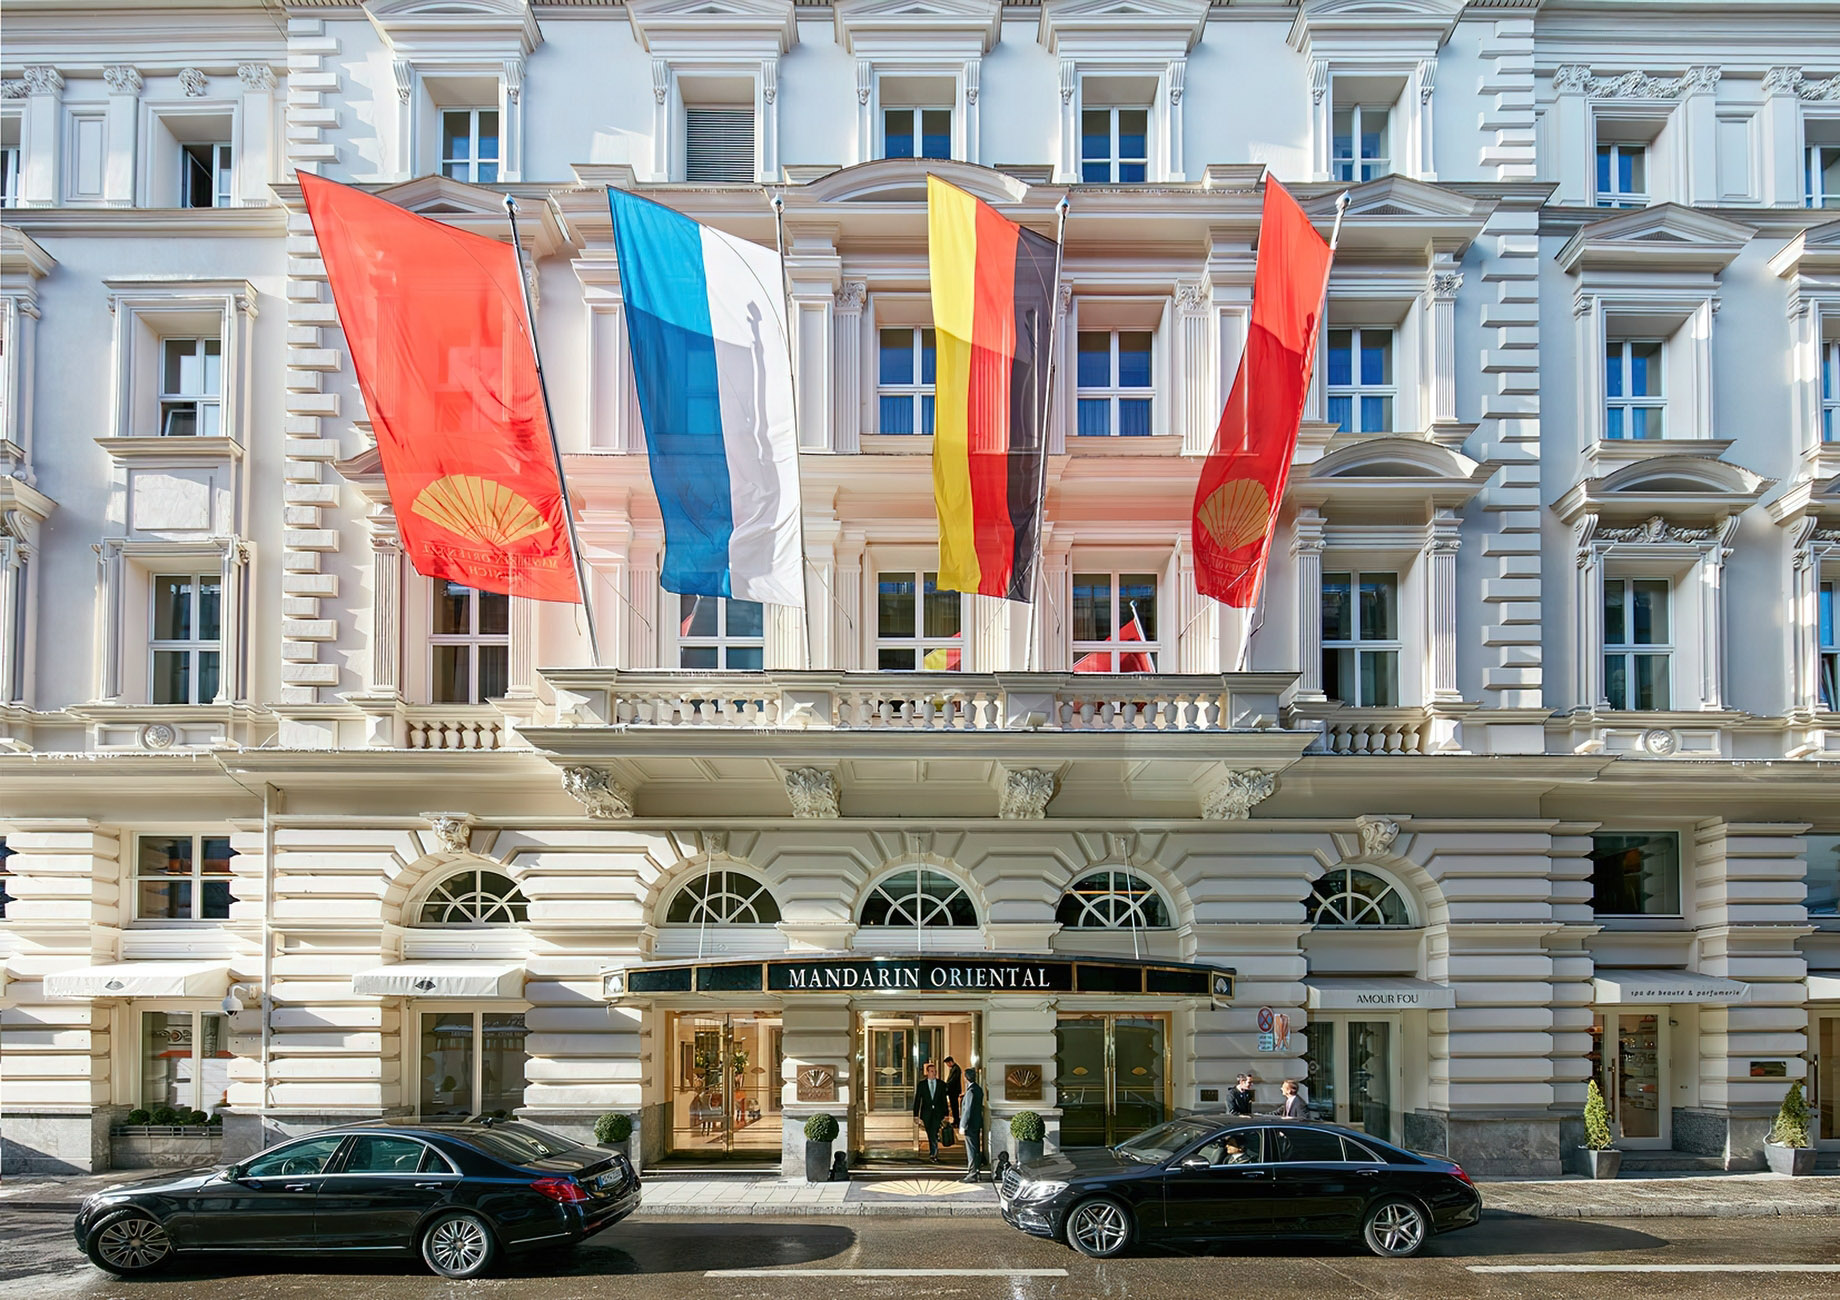 Mandarin Oriental, Munich Hotel - Munich, Germany - Exterior Entrance